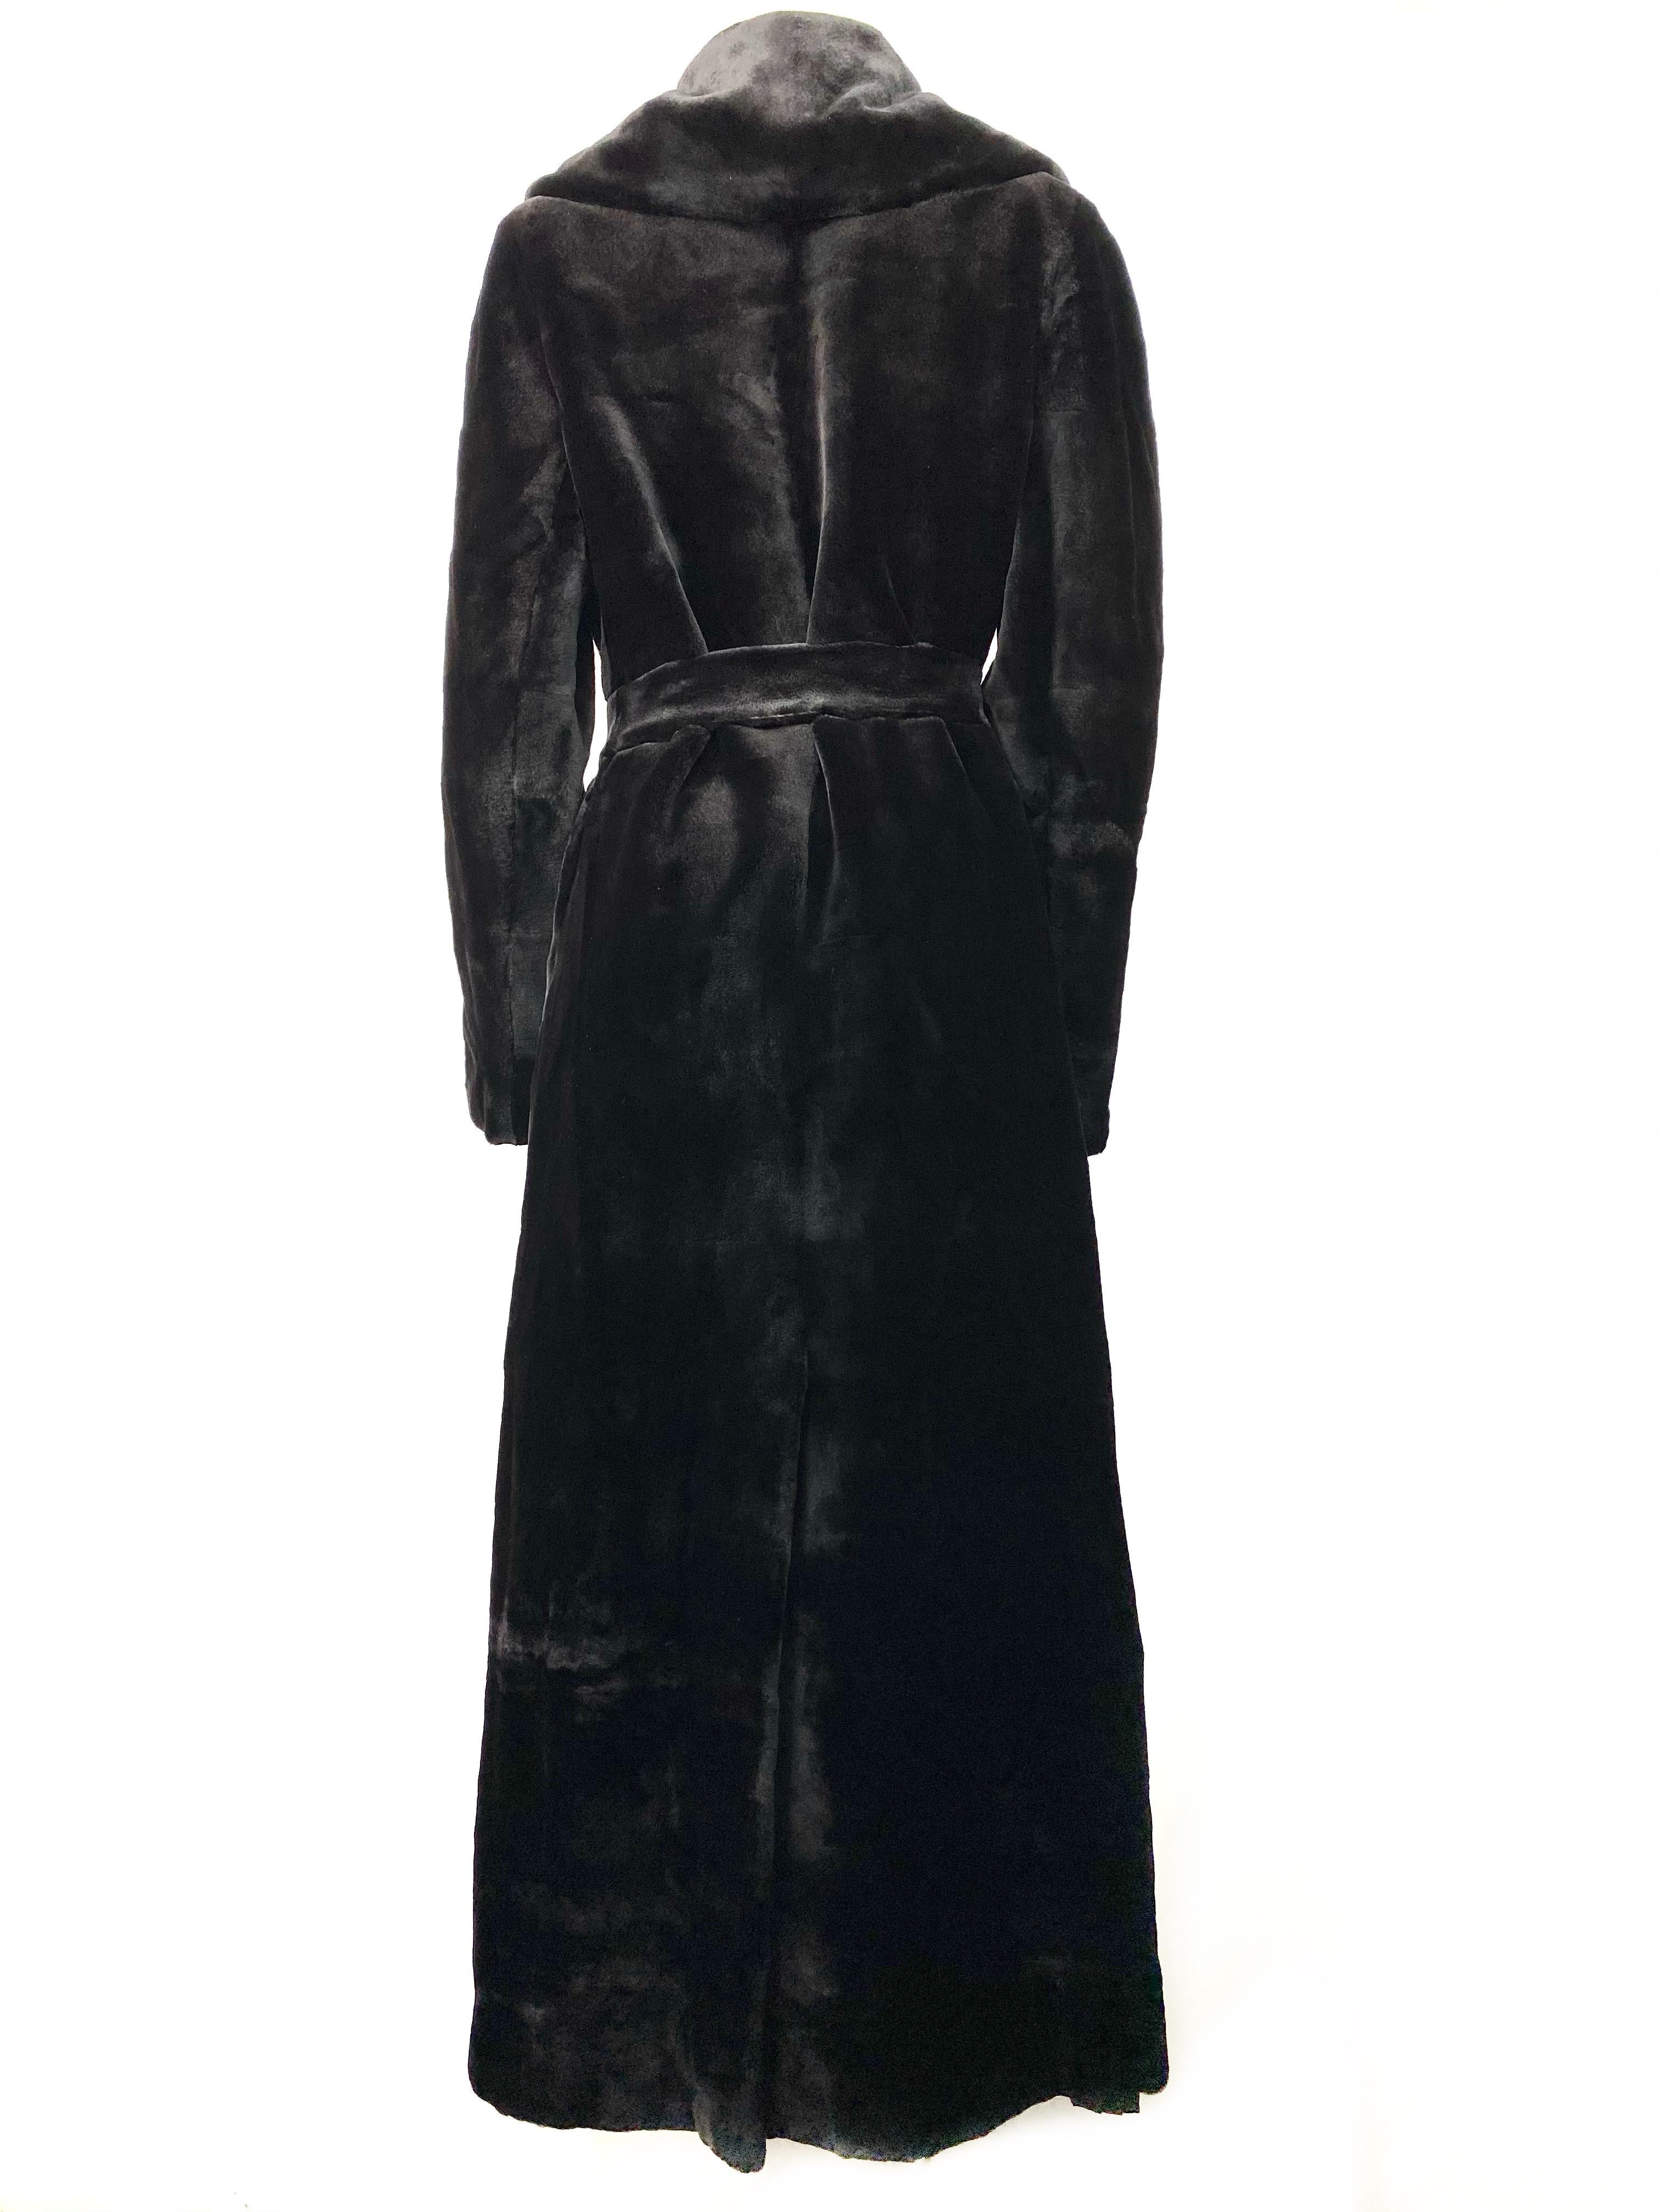 Women's or Men's J. Mendel Paris Black Sheared Mink Fur Maxi Coat w/ Belt 